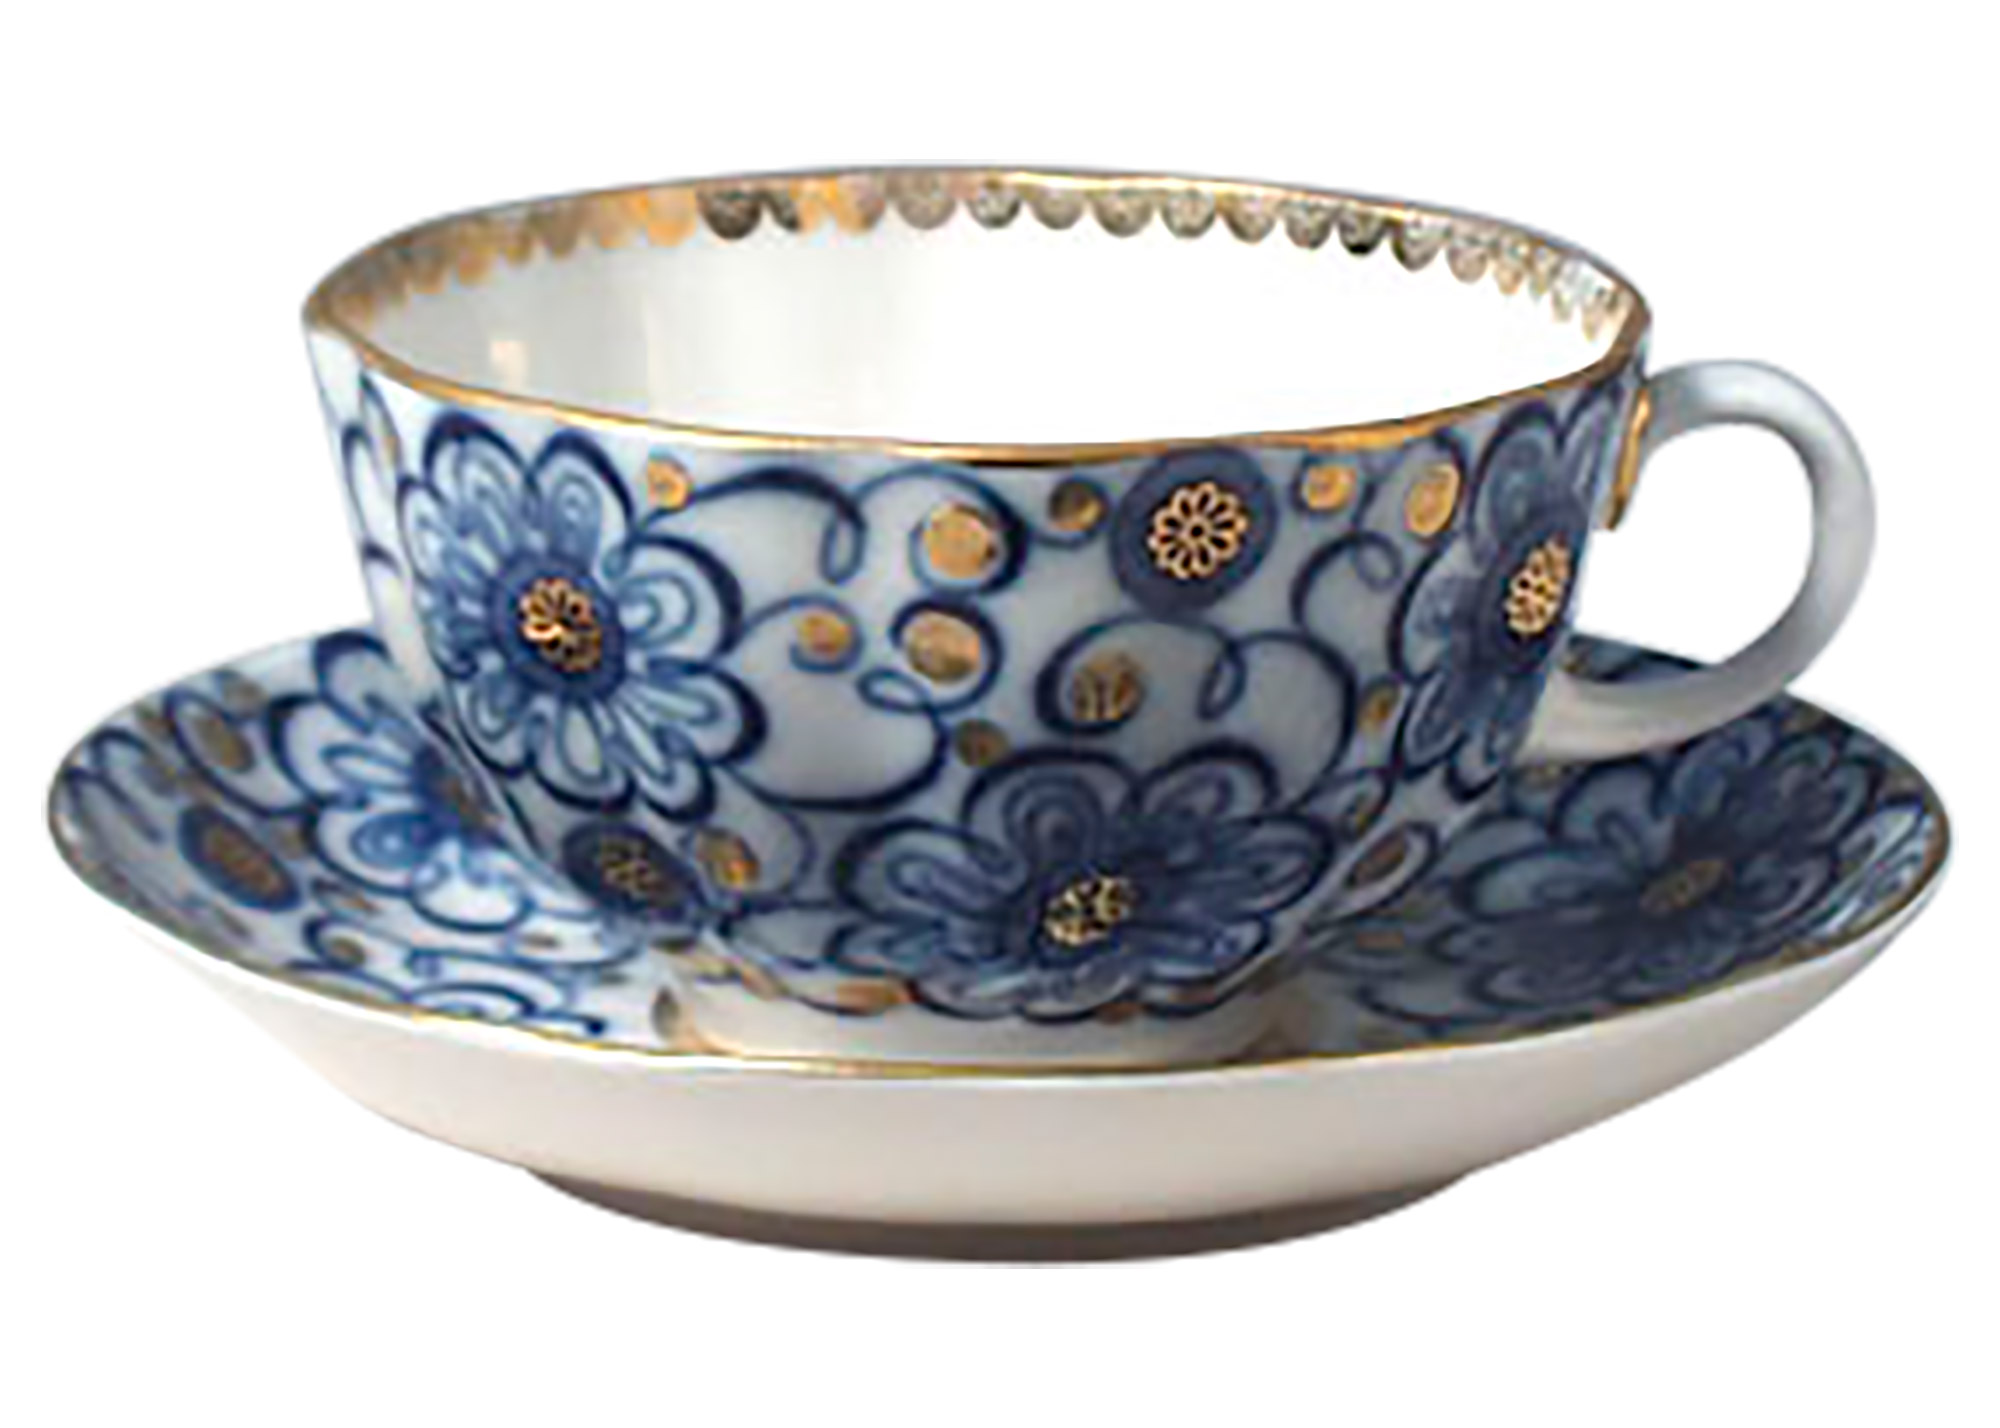 Buy Winding Twig Porcelain Cup & Saucer at GoldenCockerel.com